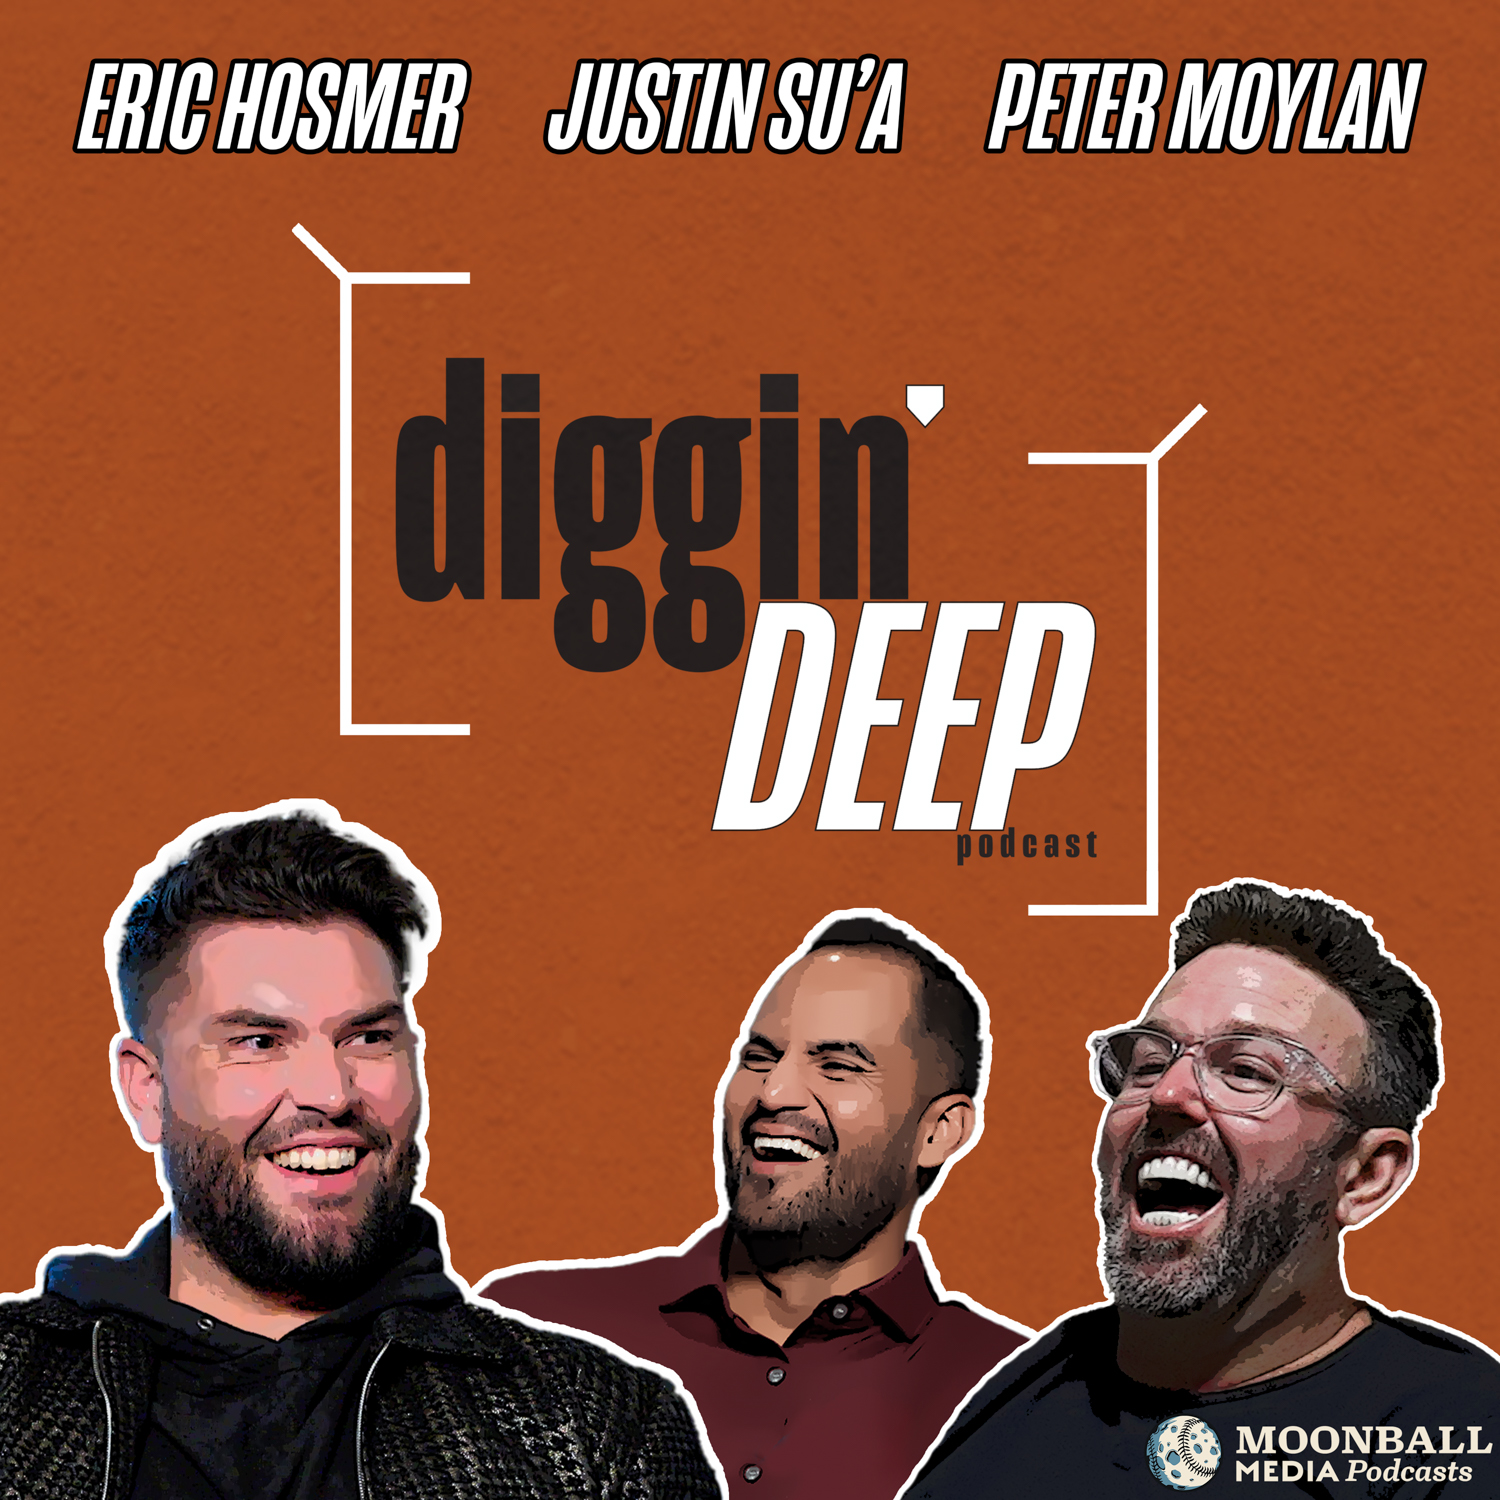 Diggin Deep Podcast